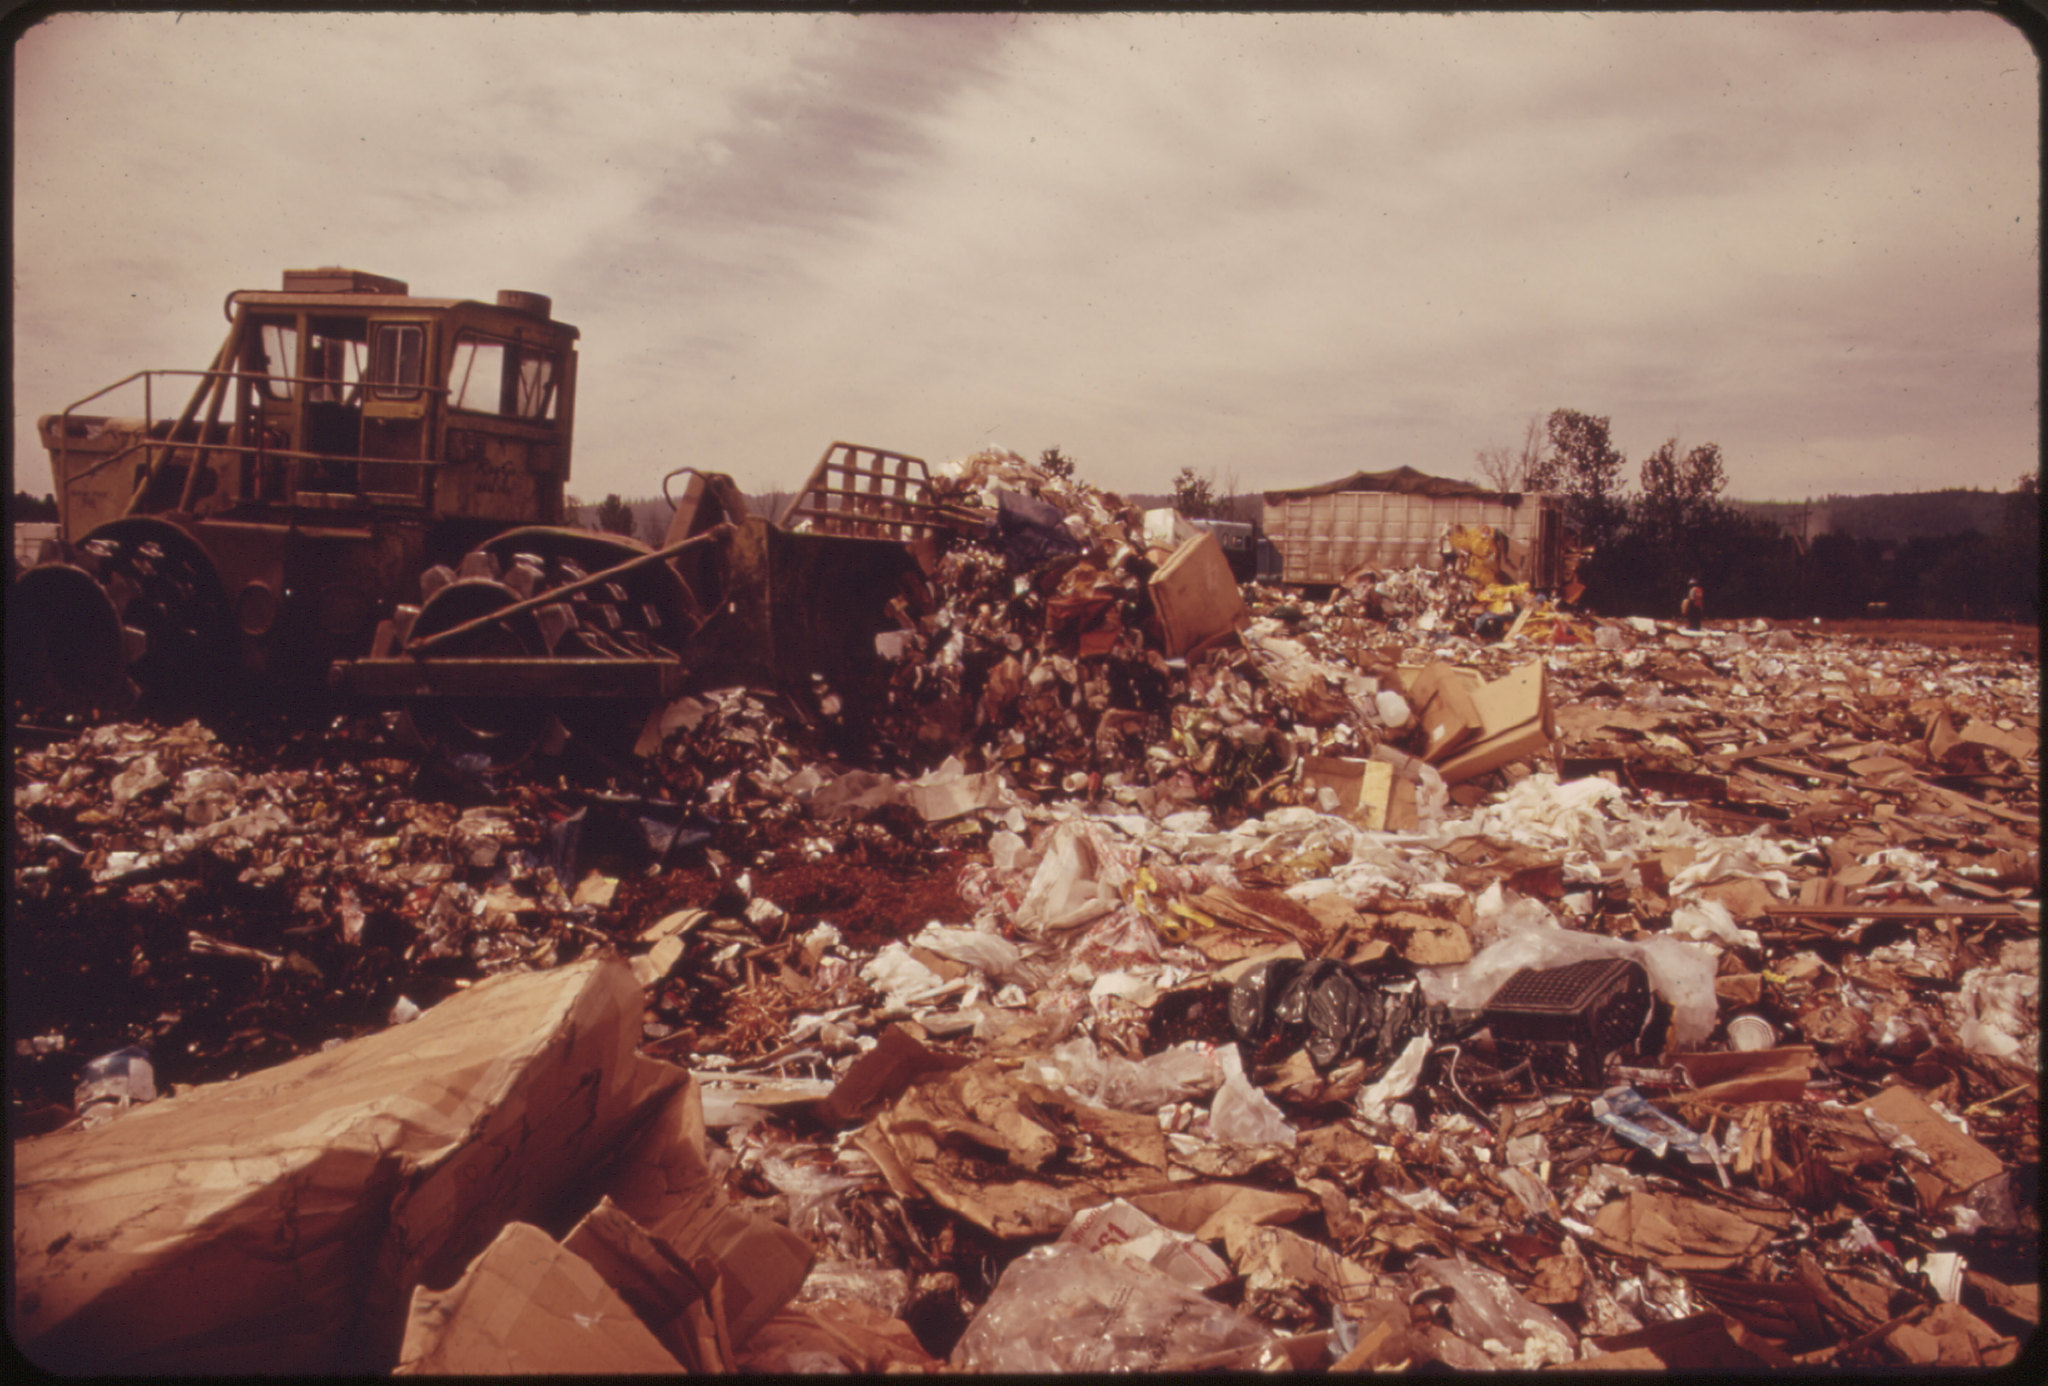 City of Portland Landfill, 1973